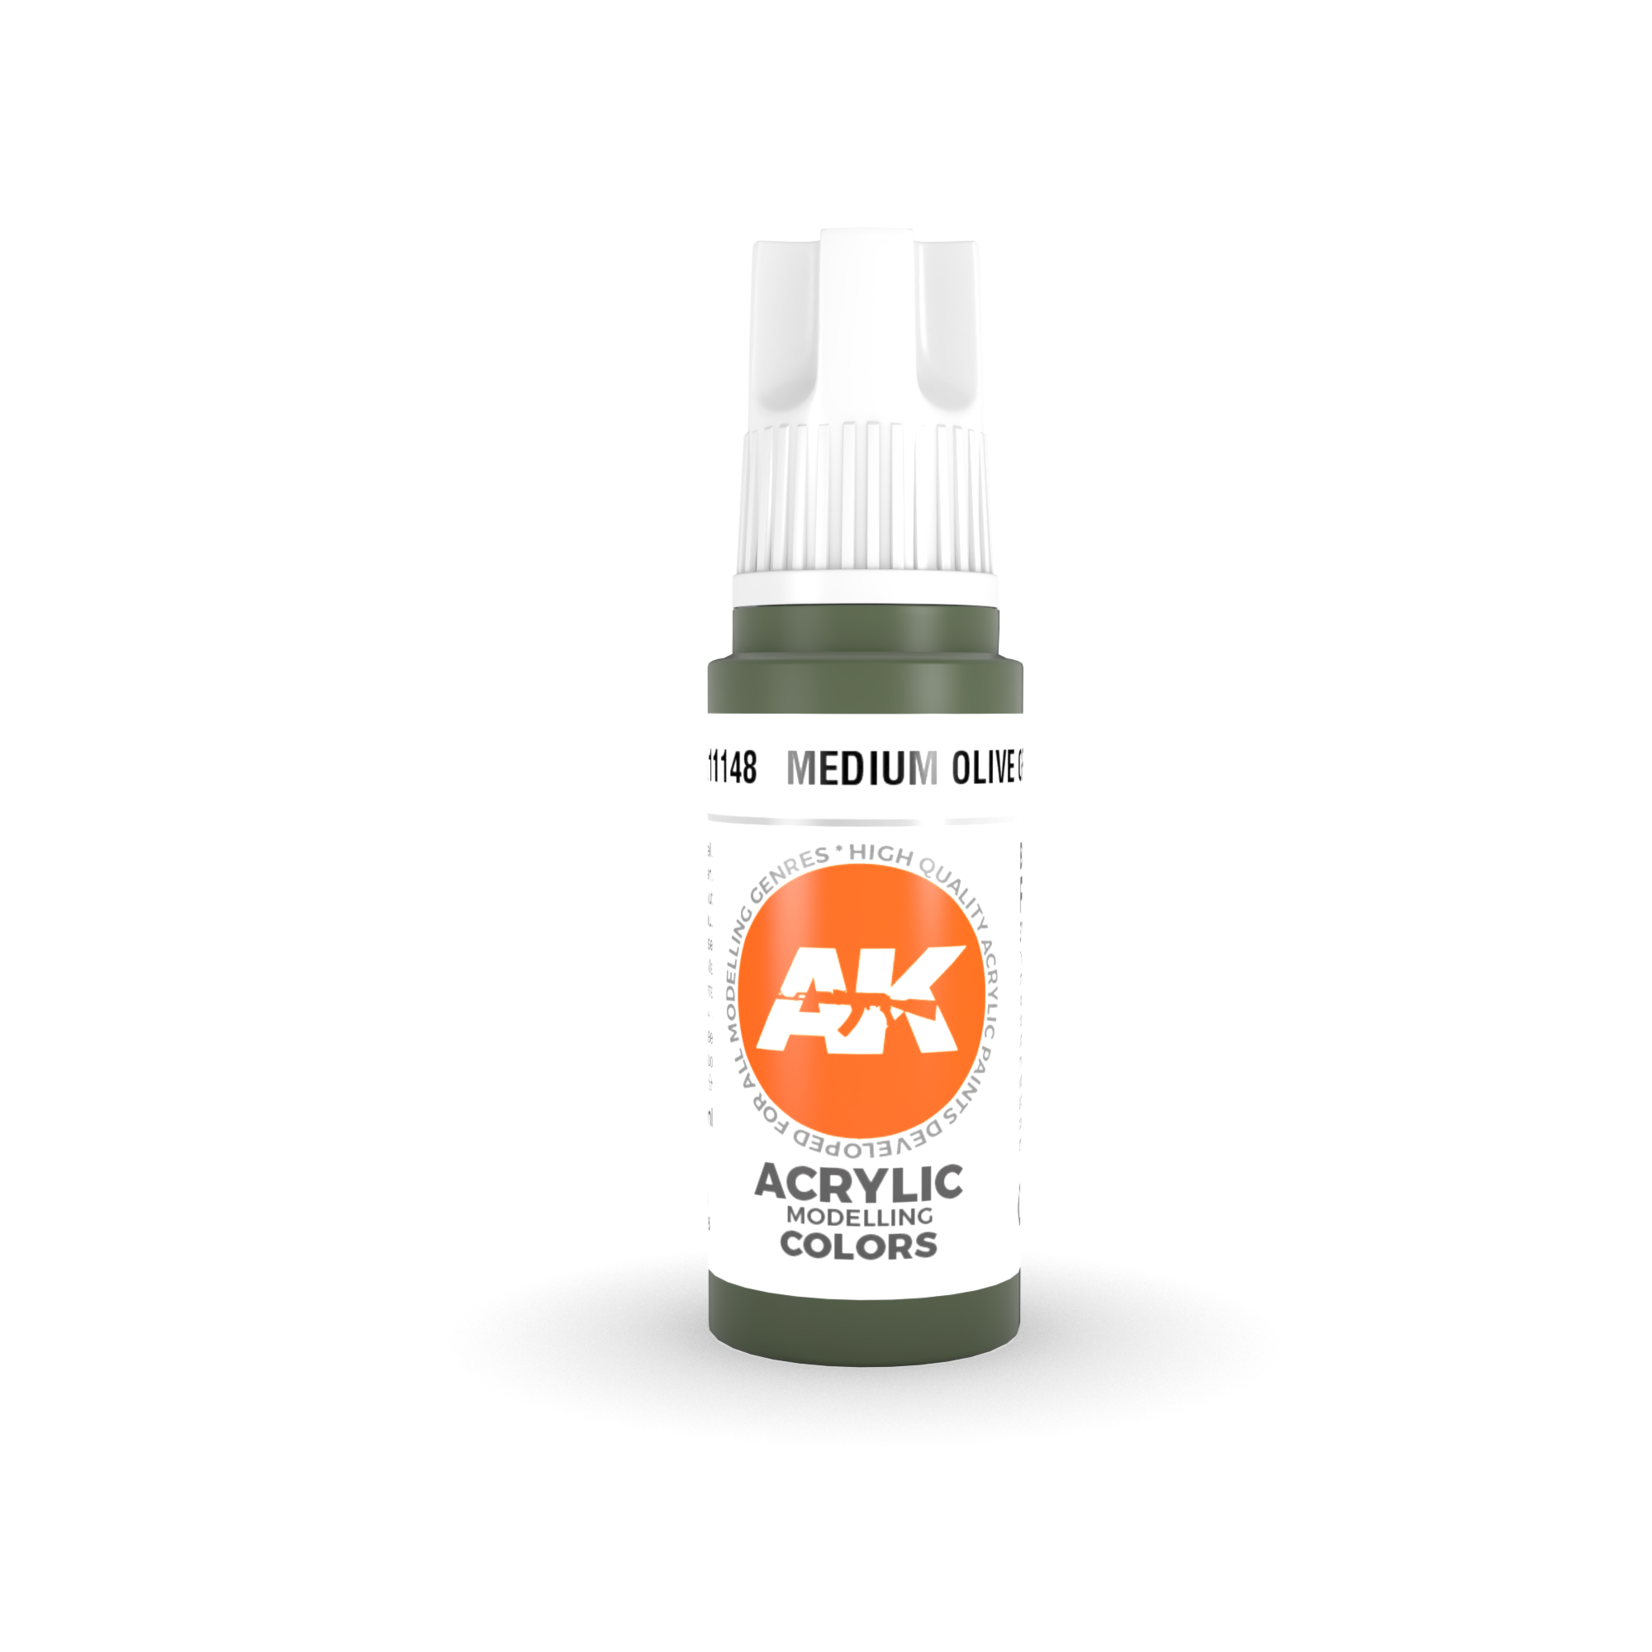 AK Interactive AK11148 3G Acrylic Medium Olive Green 17ml